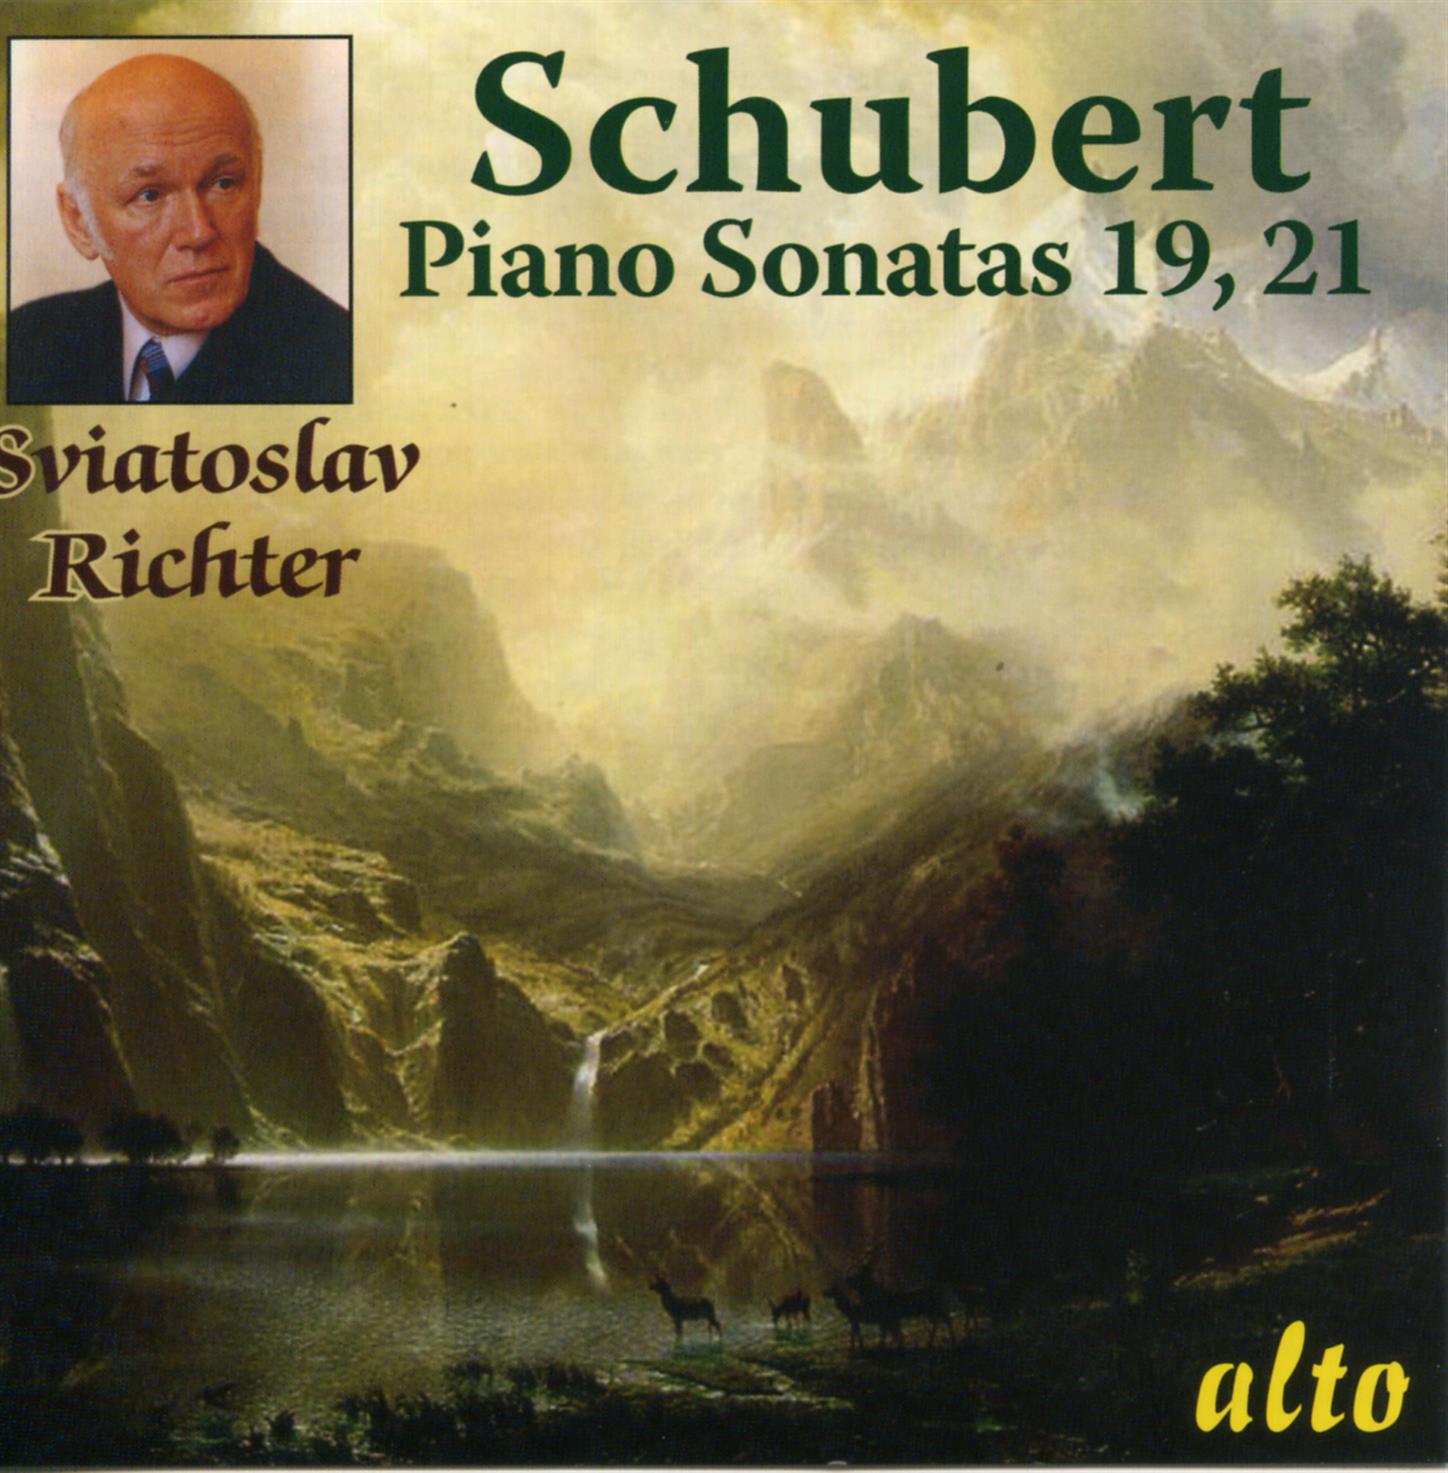 Piano Sonata No. 19 in C minor, Op.posth. (D958): II. Adagio